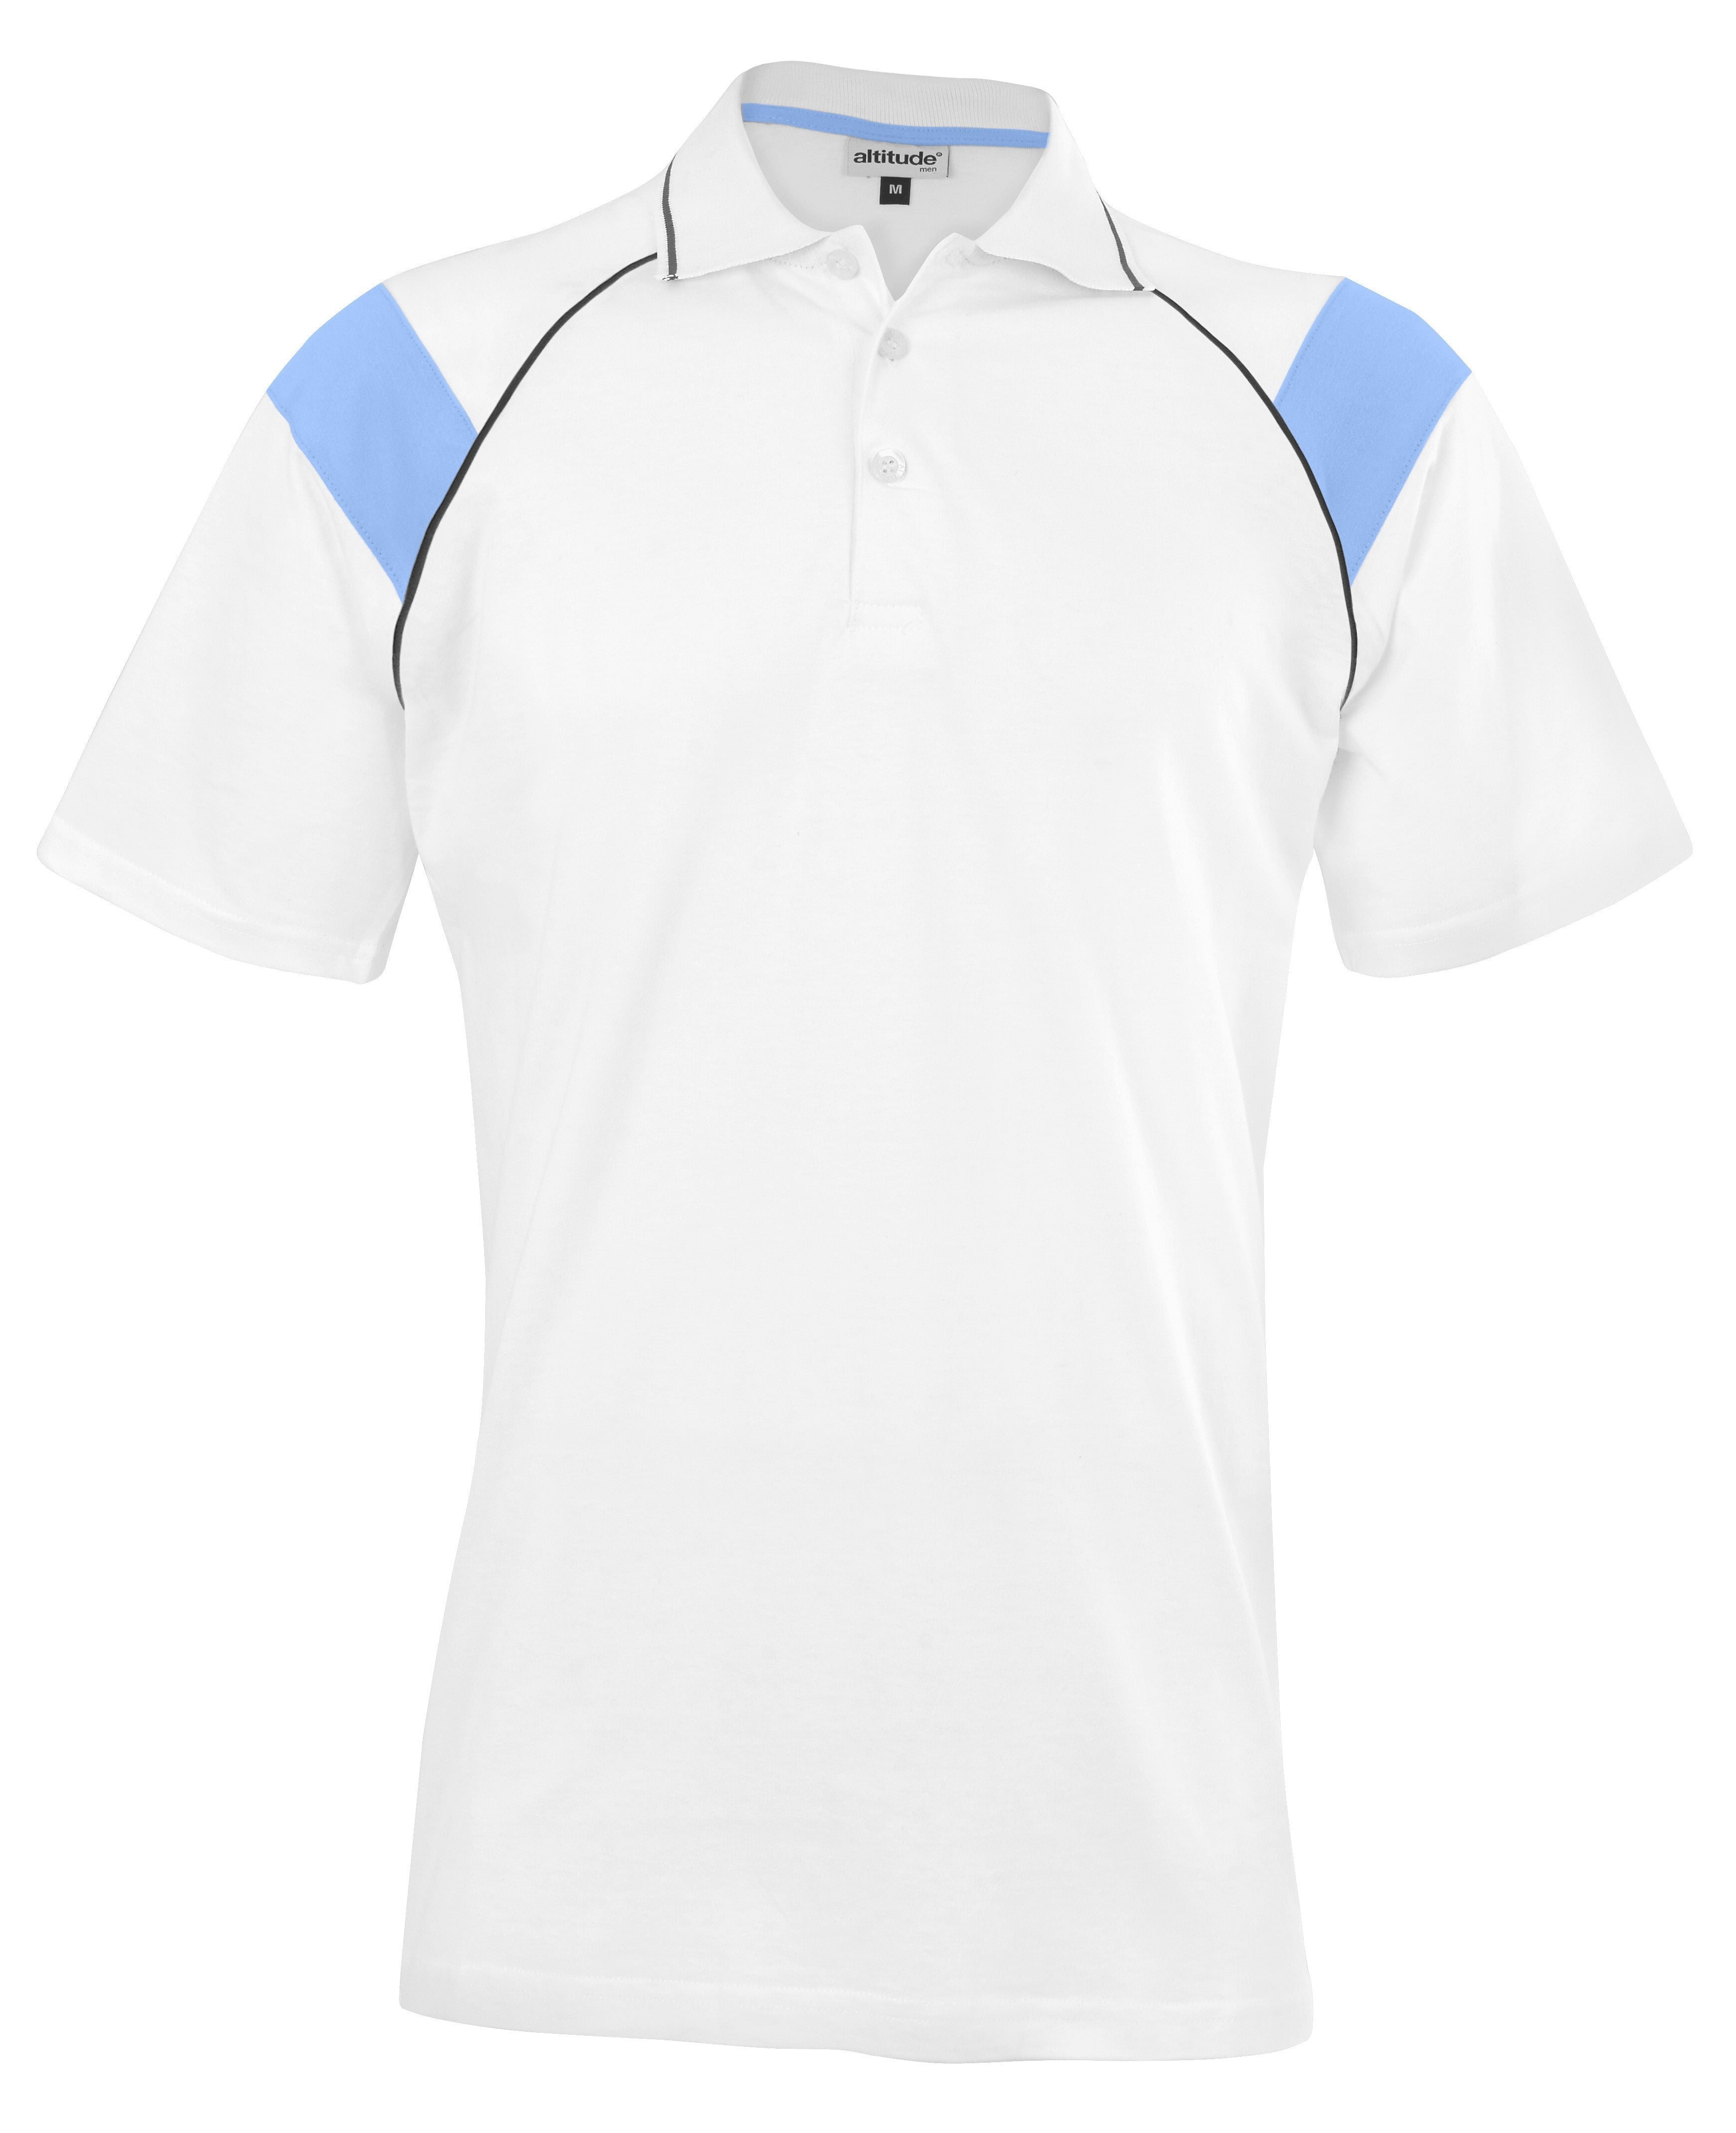 Mens Score Golf Shirt - White Light Blue Only-2XL-White With Light Blue-WLB